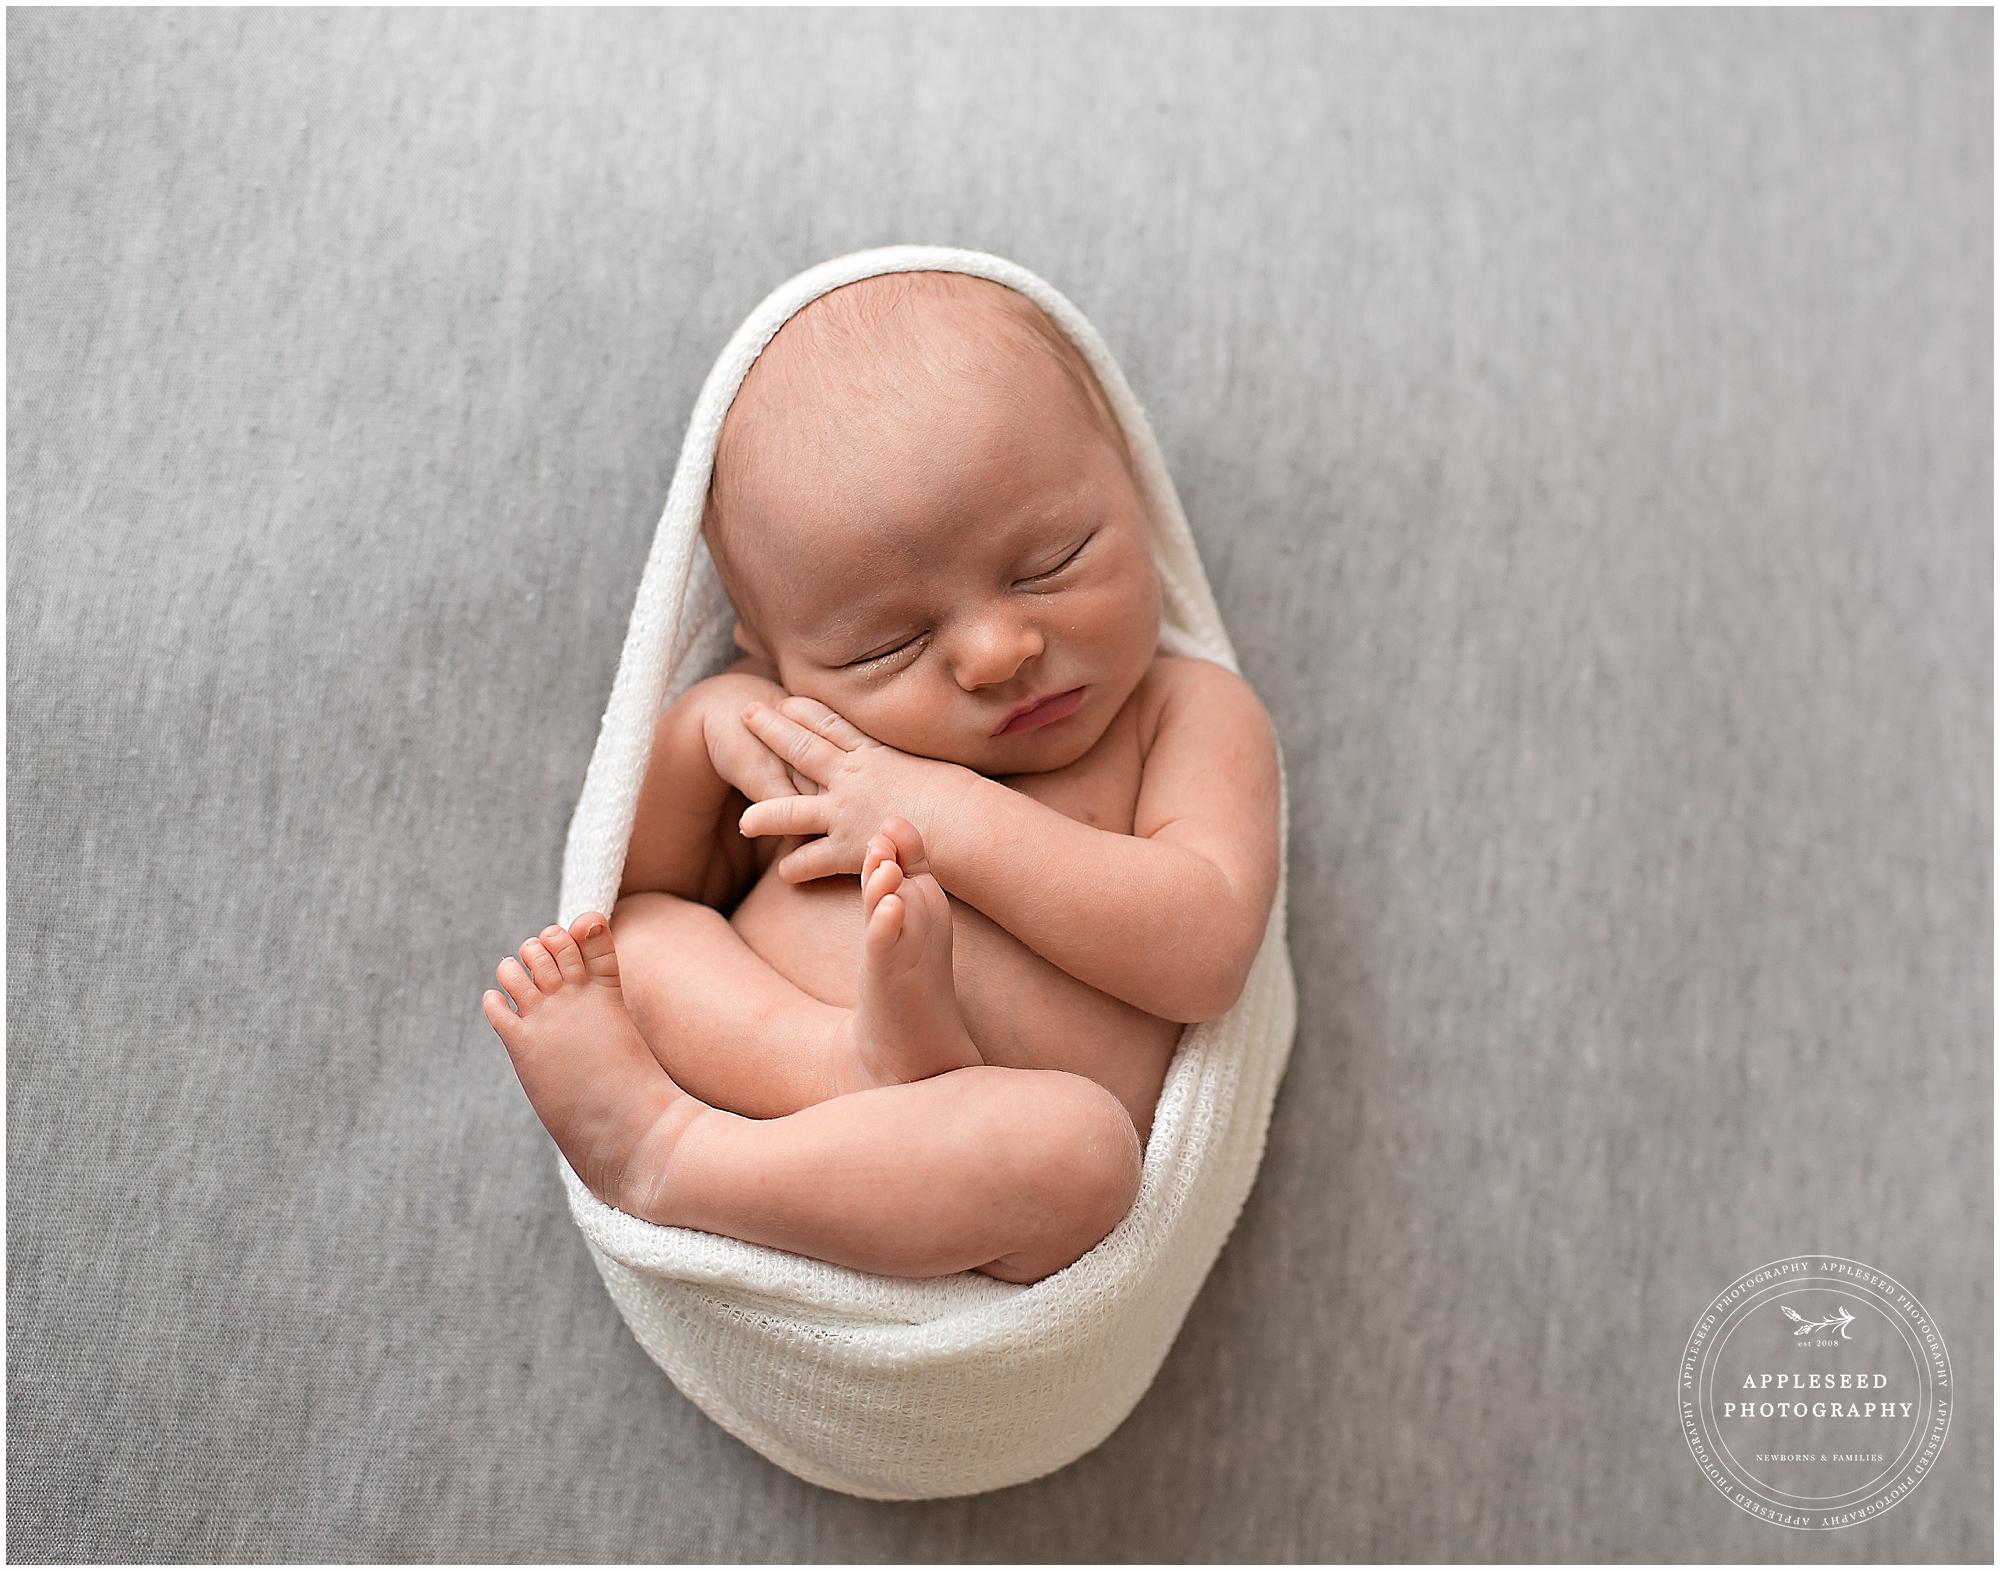 Newborn Photographer Atlanta | Harry | Appleseed Photography